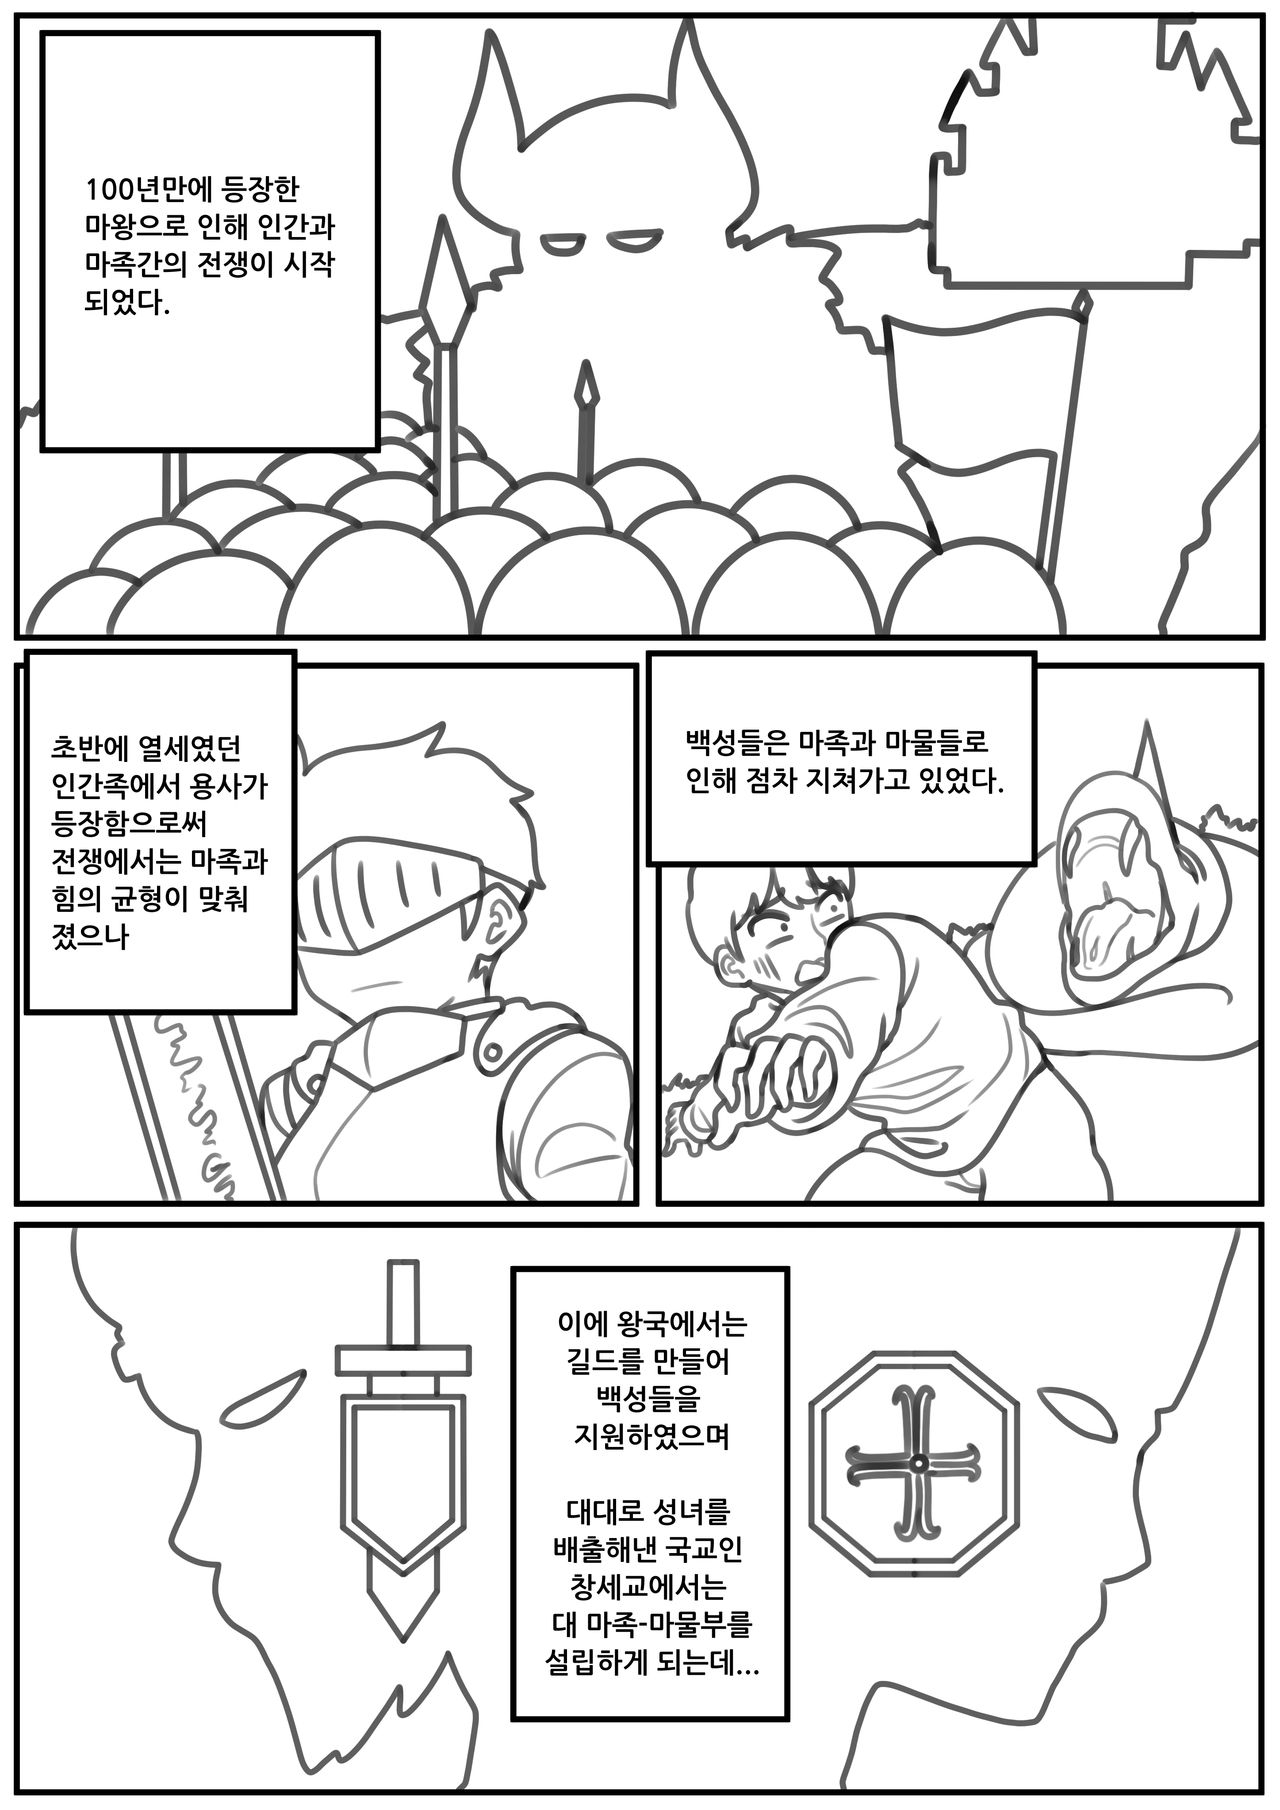 [Chameleon] God will take care of you - Prologue (Original) [Korean] 1